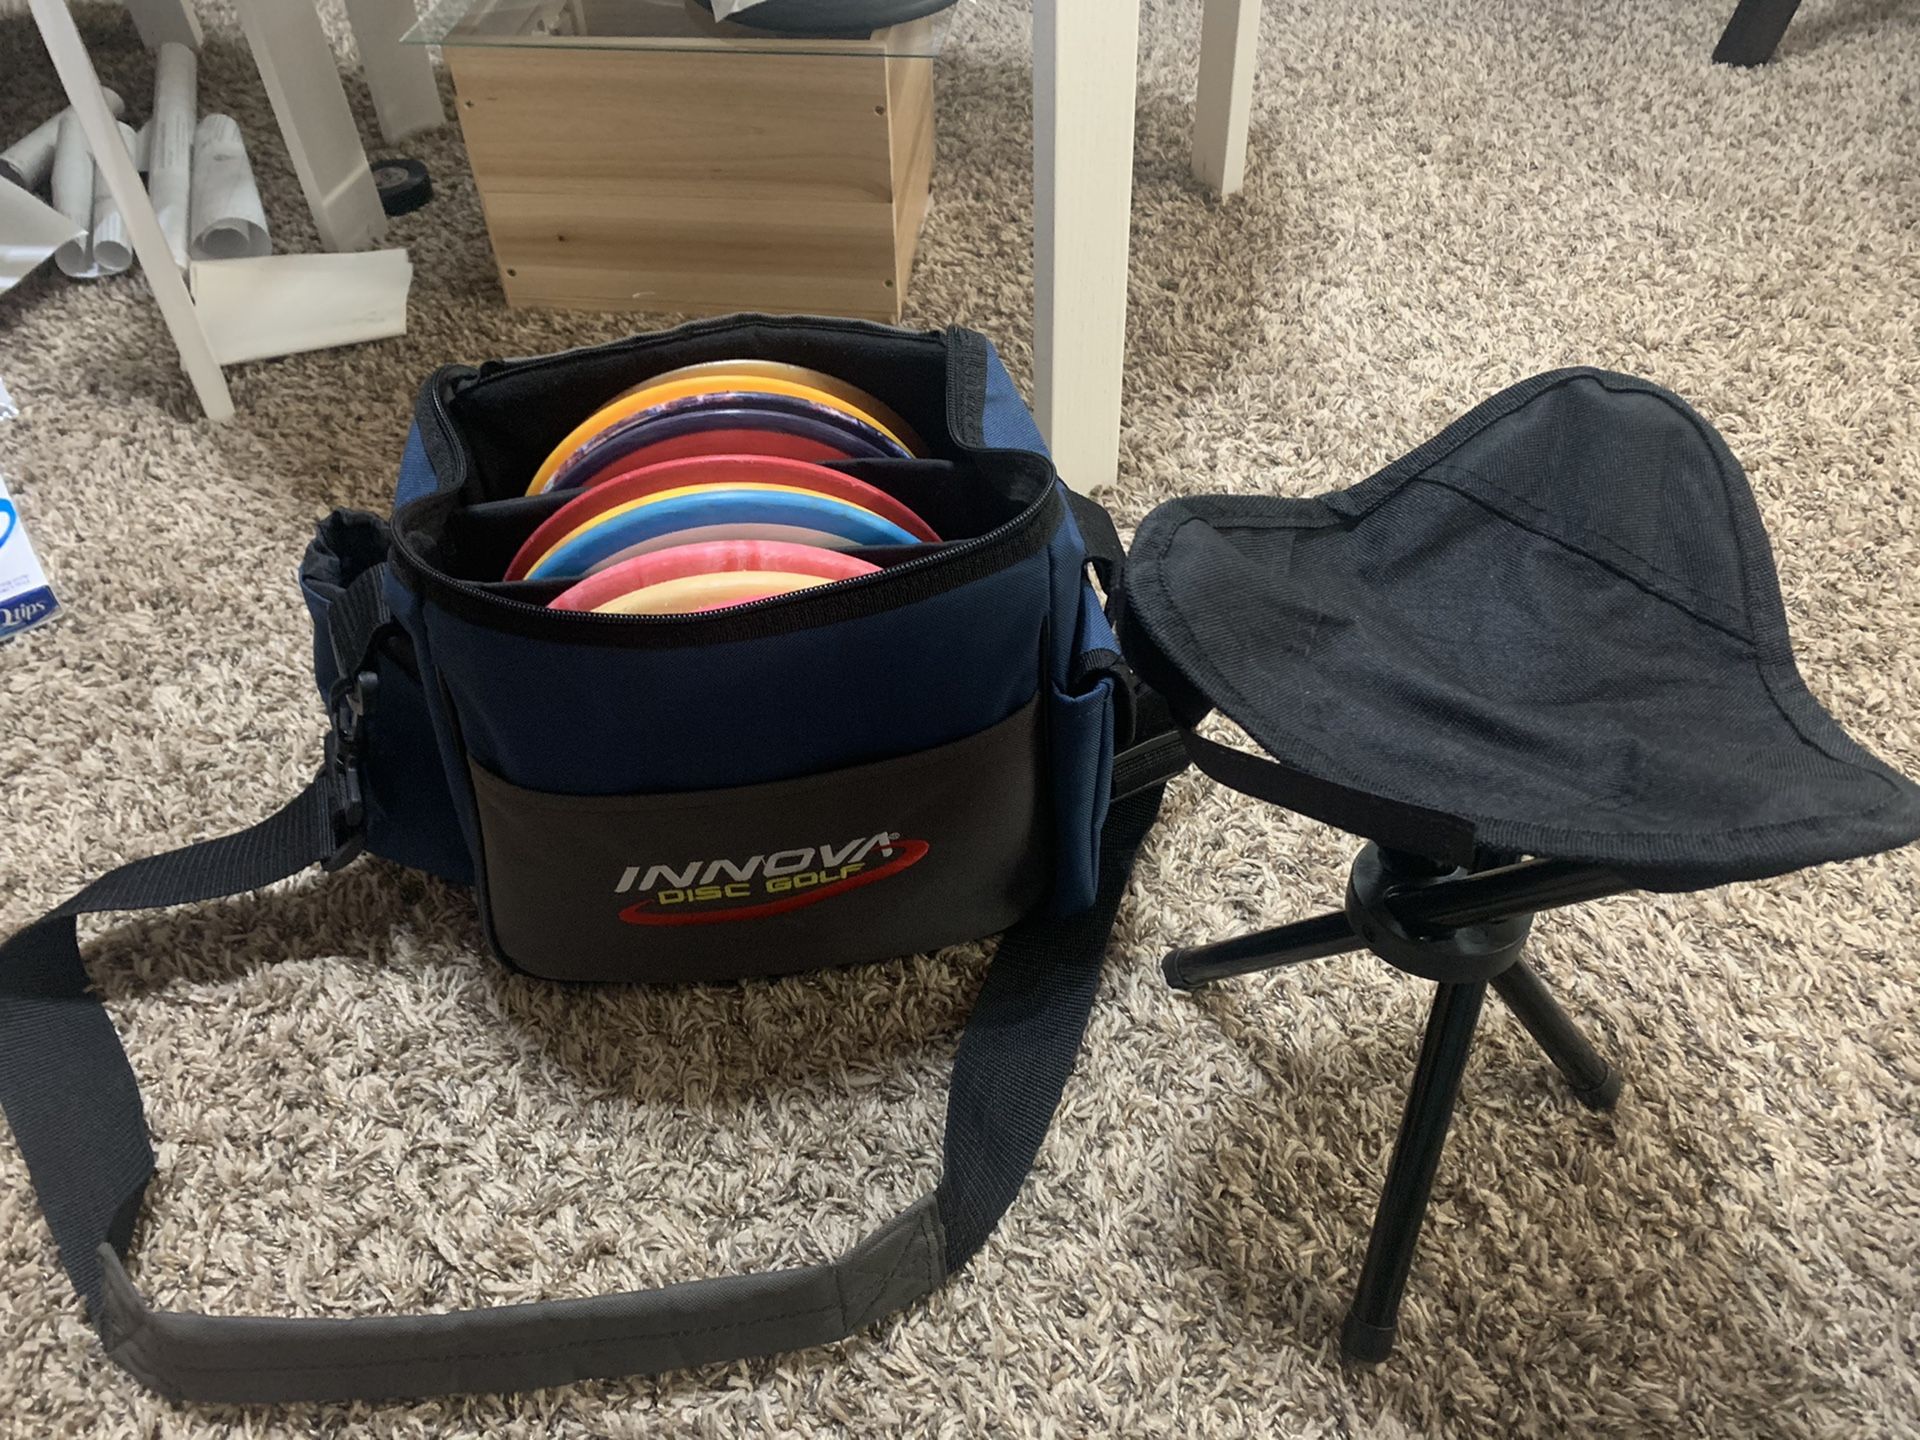 Disc golf bag with discs +